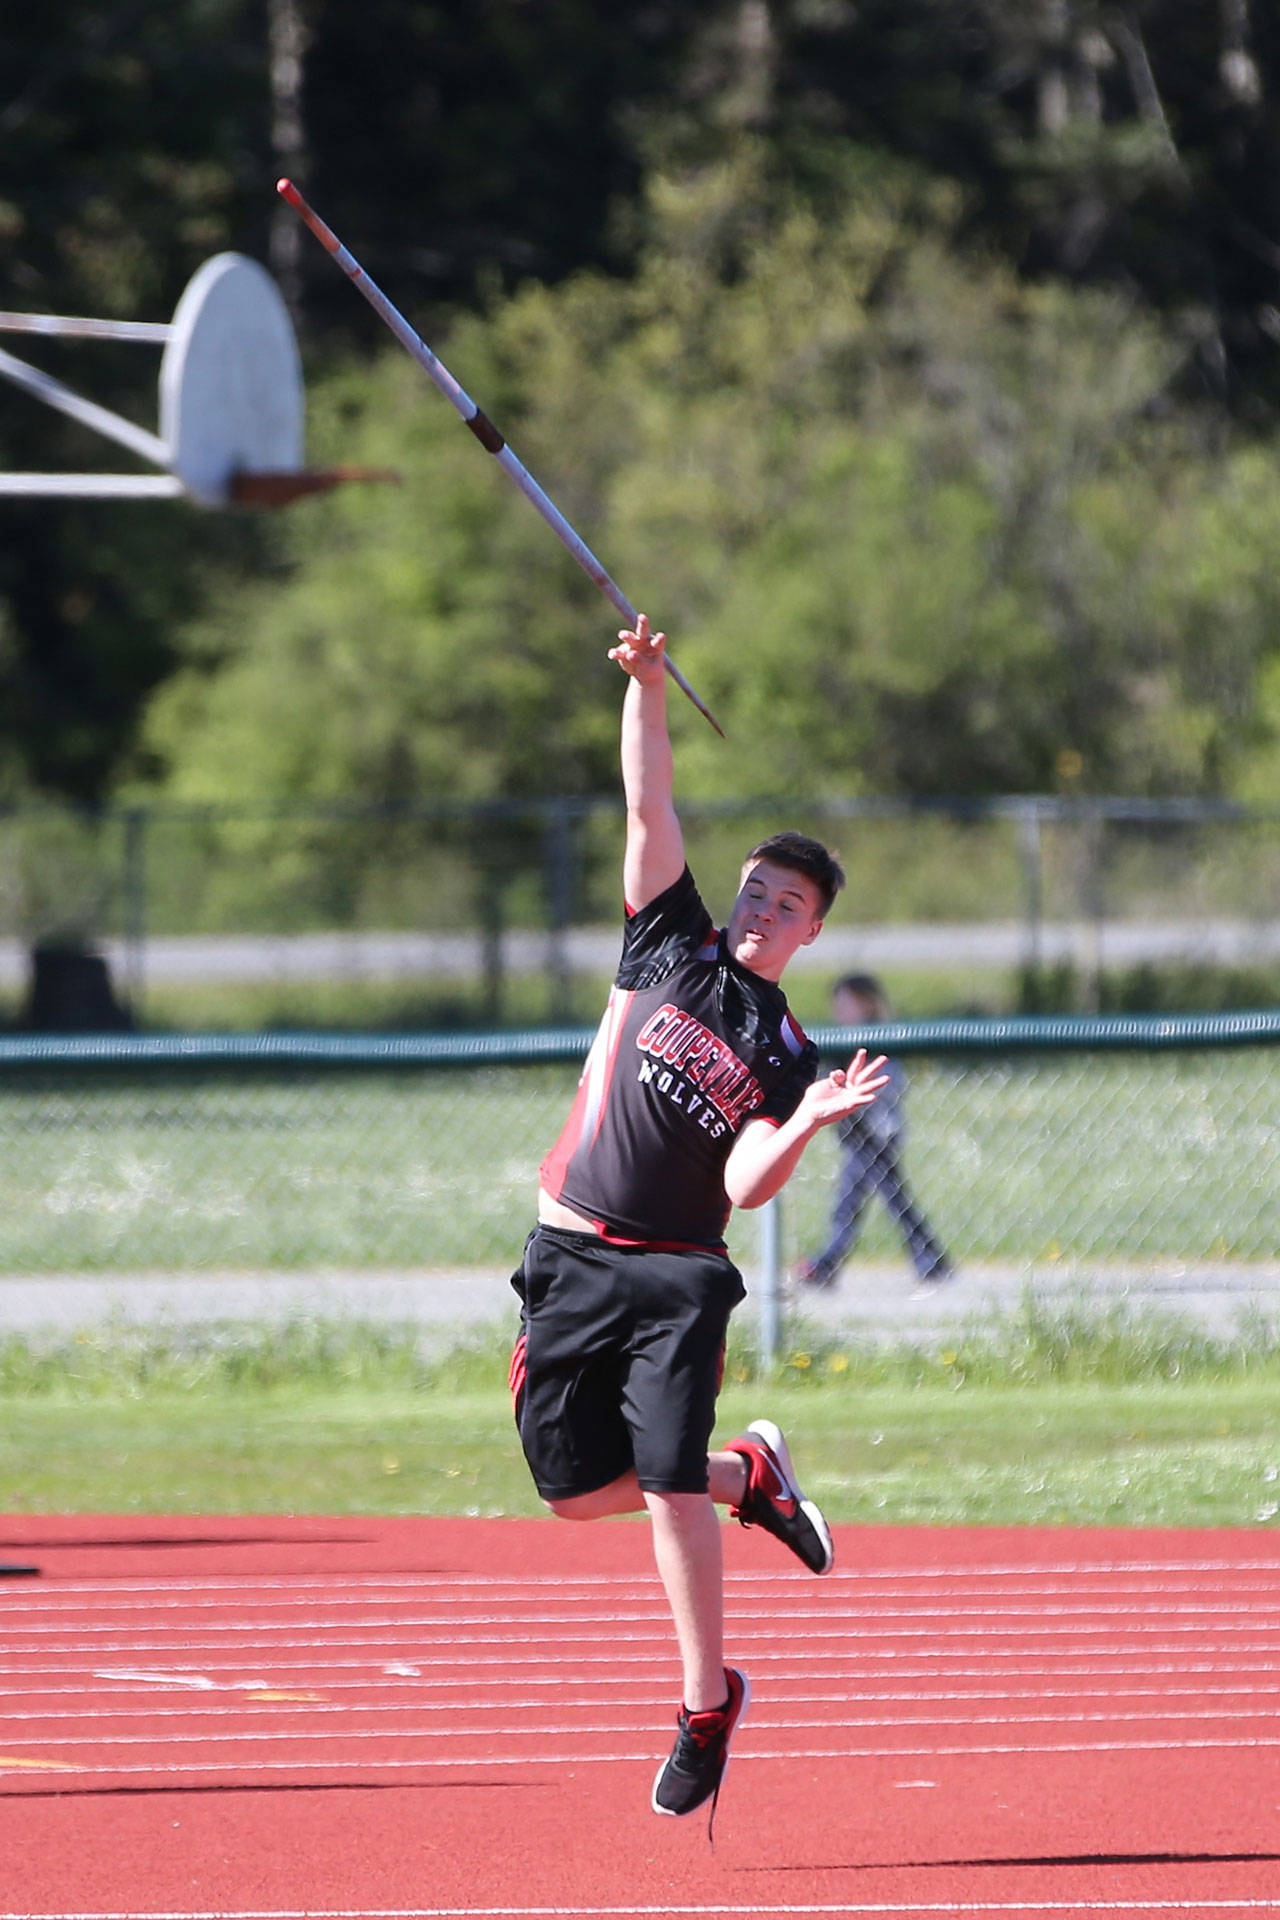 Jacob Martin hurls the javelin in Monday’s meet. (Photo by John Fisken)